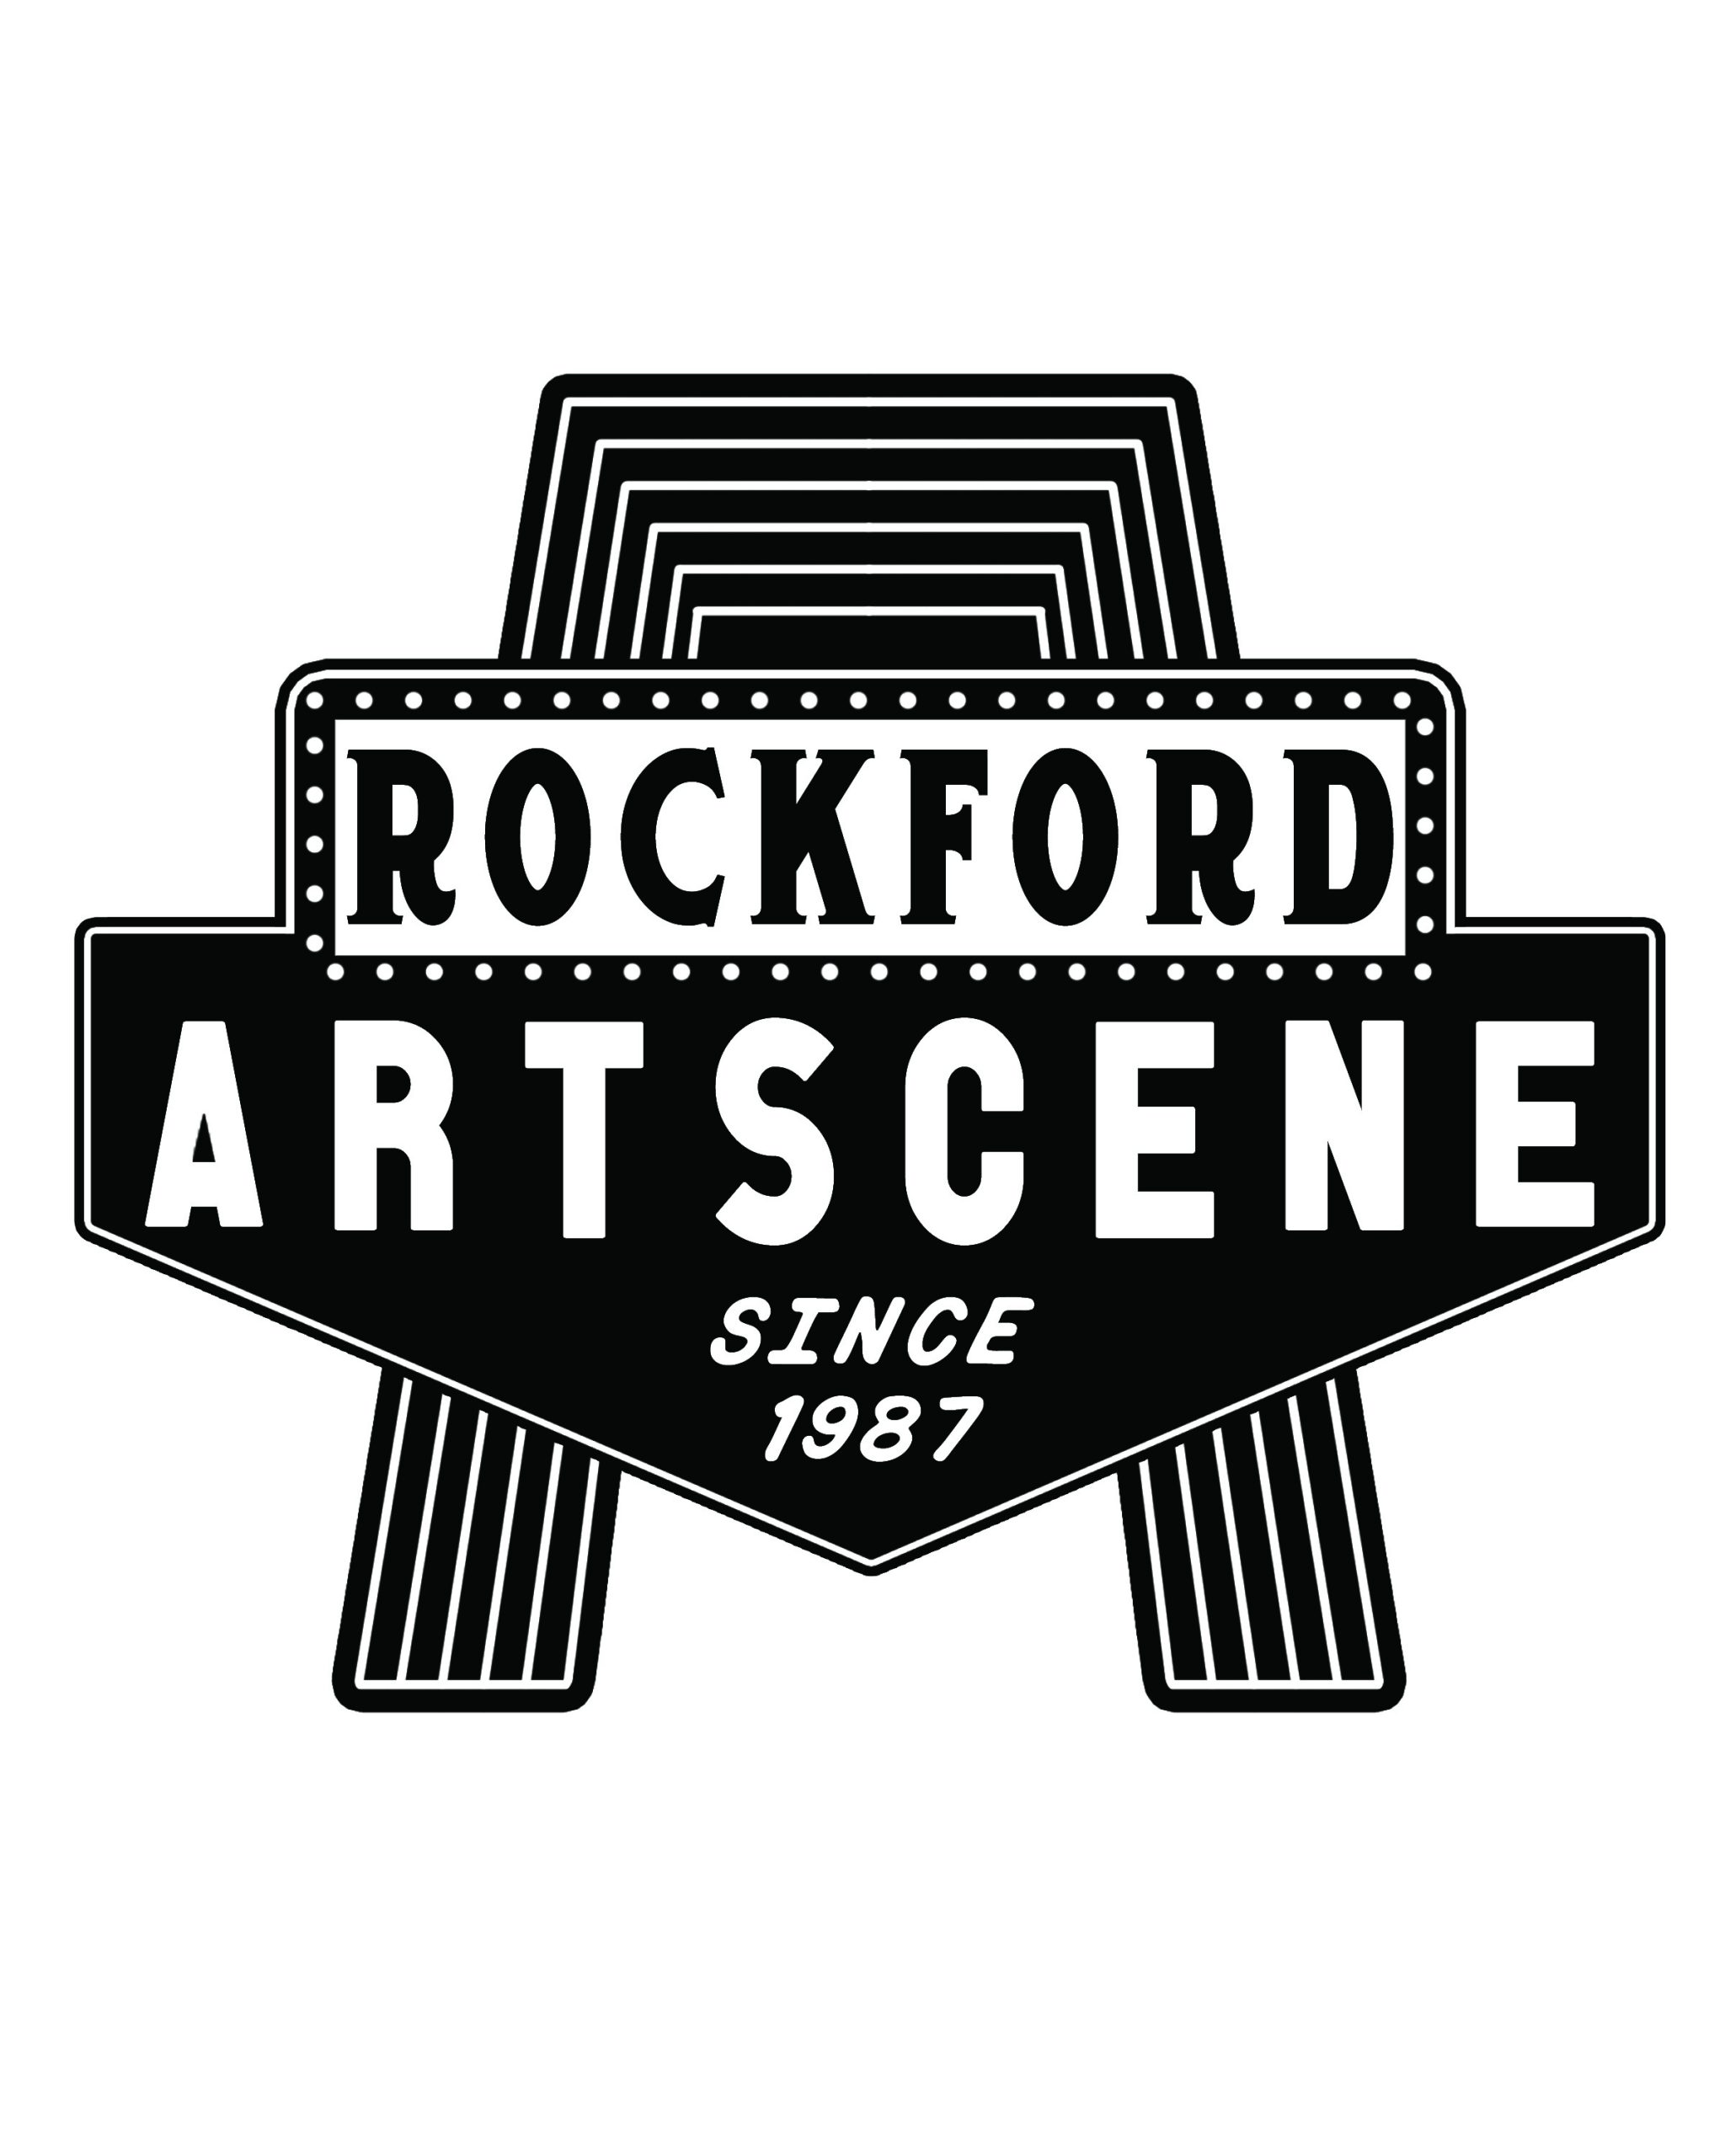 ArtScene The Rockford Area Arts Council